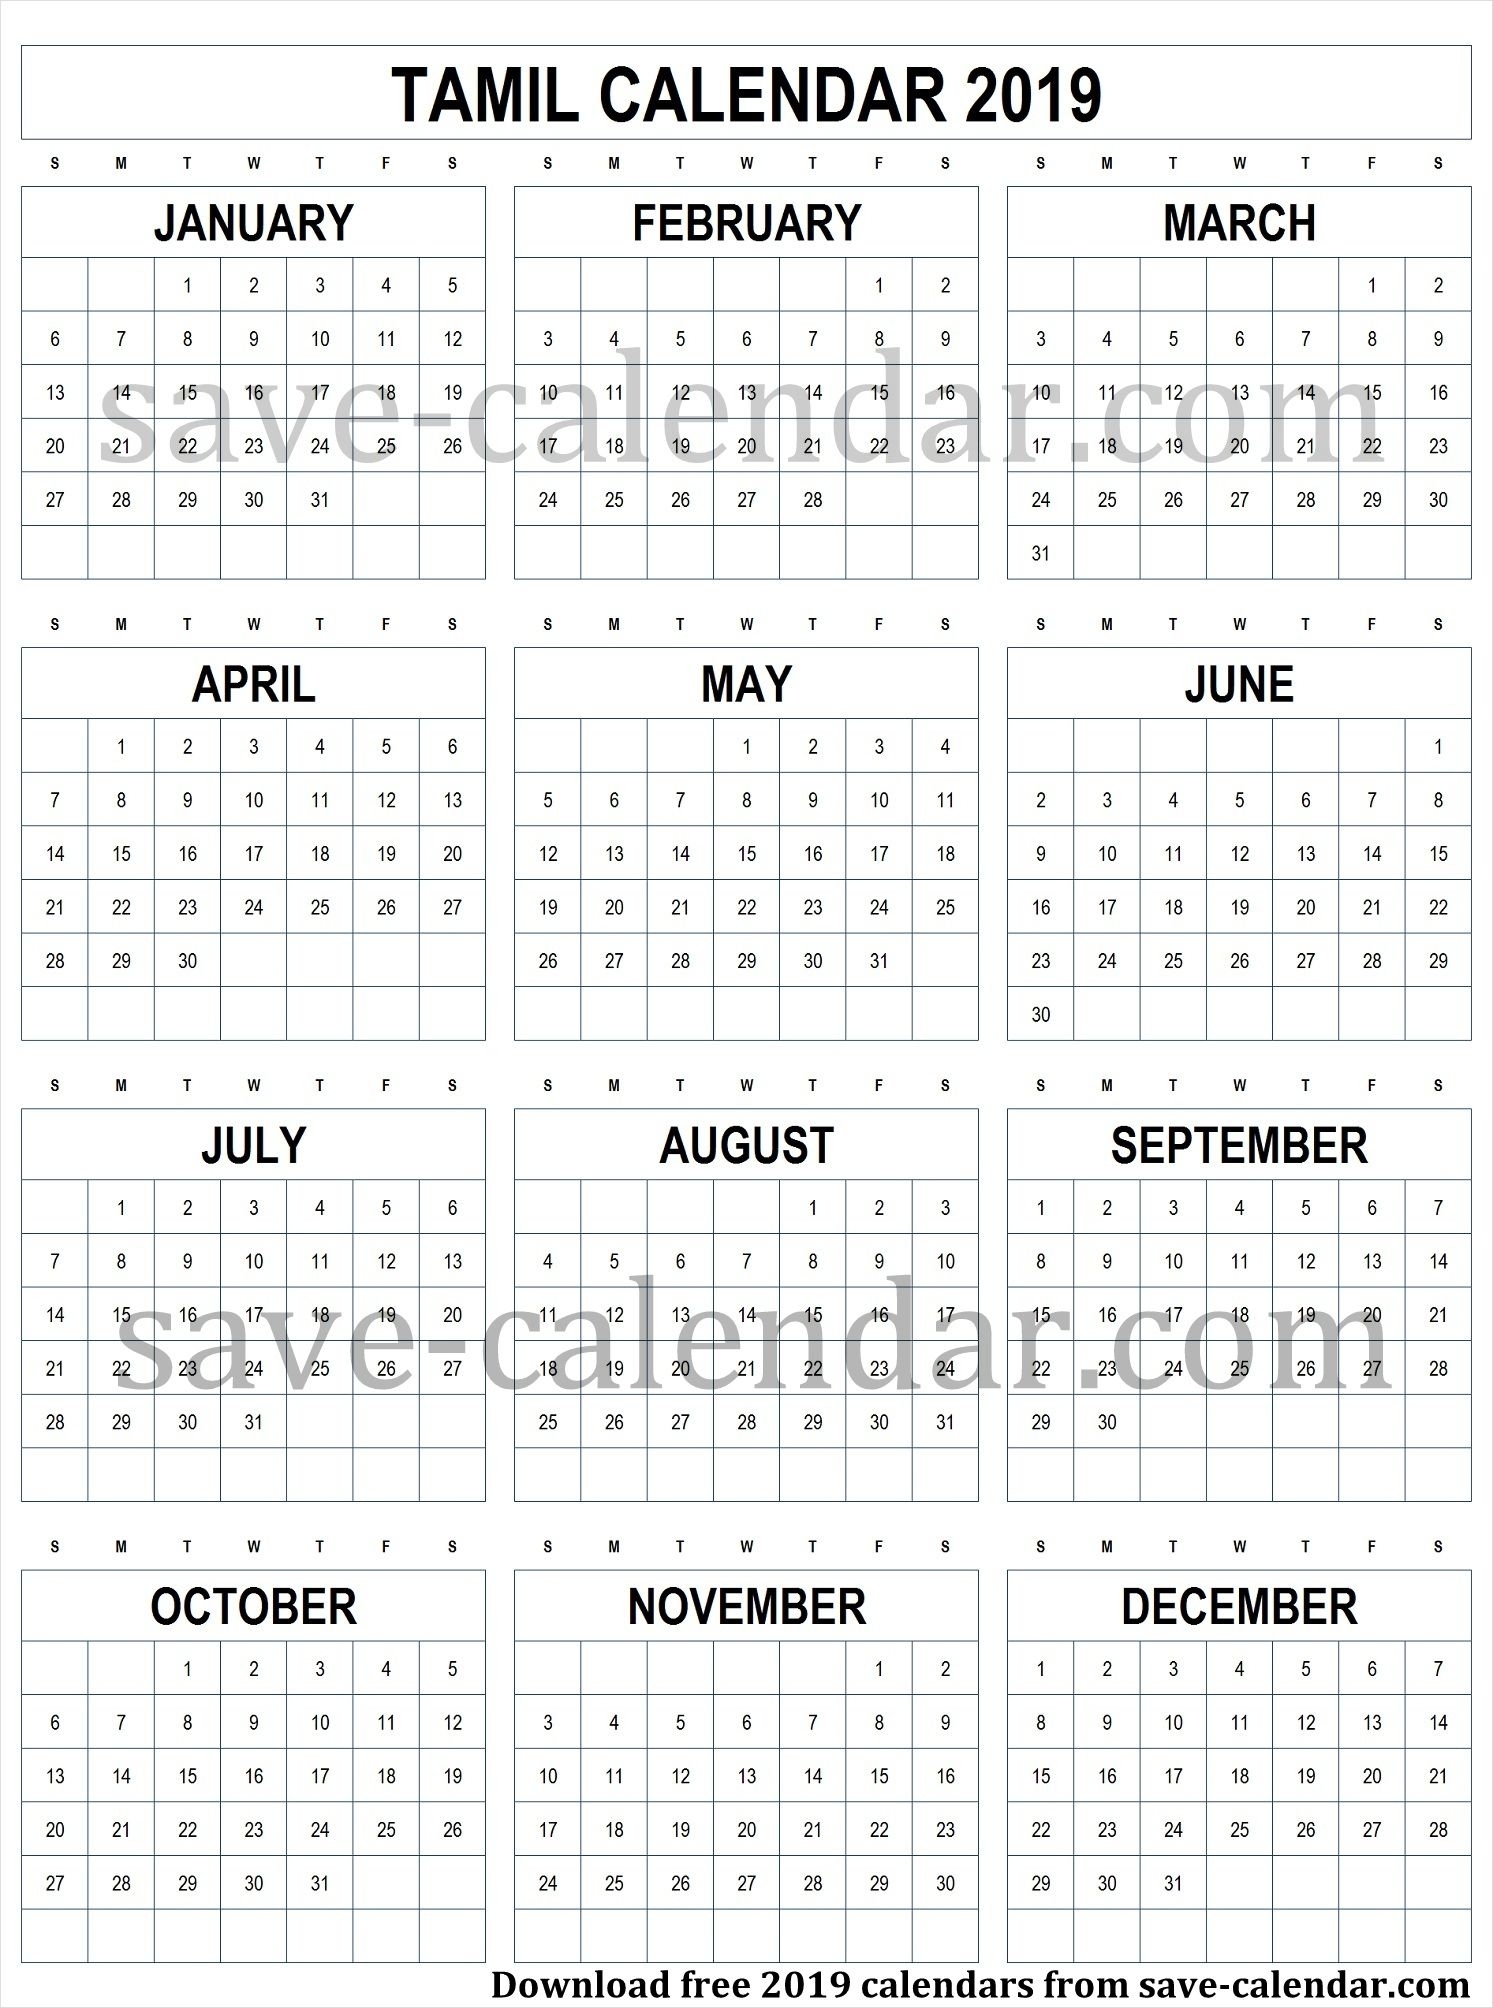 Telugu 2019 Calendar | 2019 Calendar, Yearly Calendar